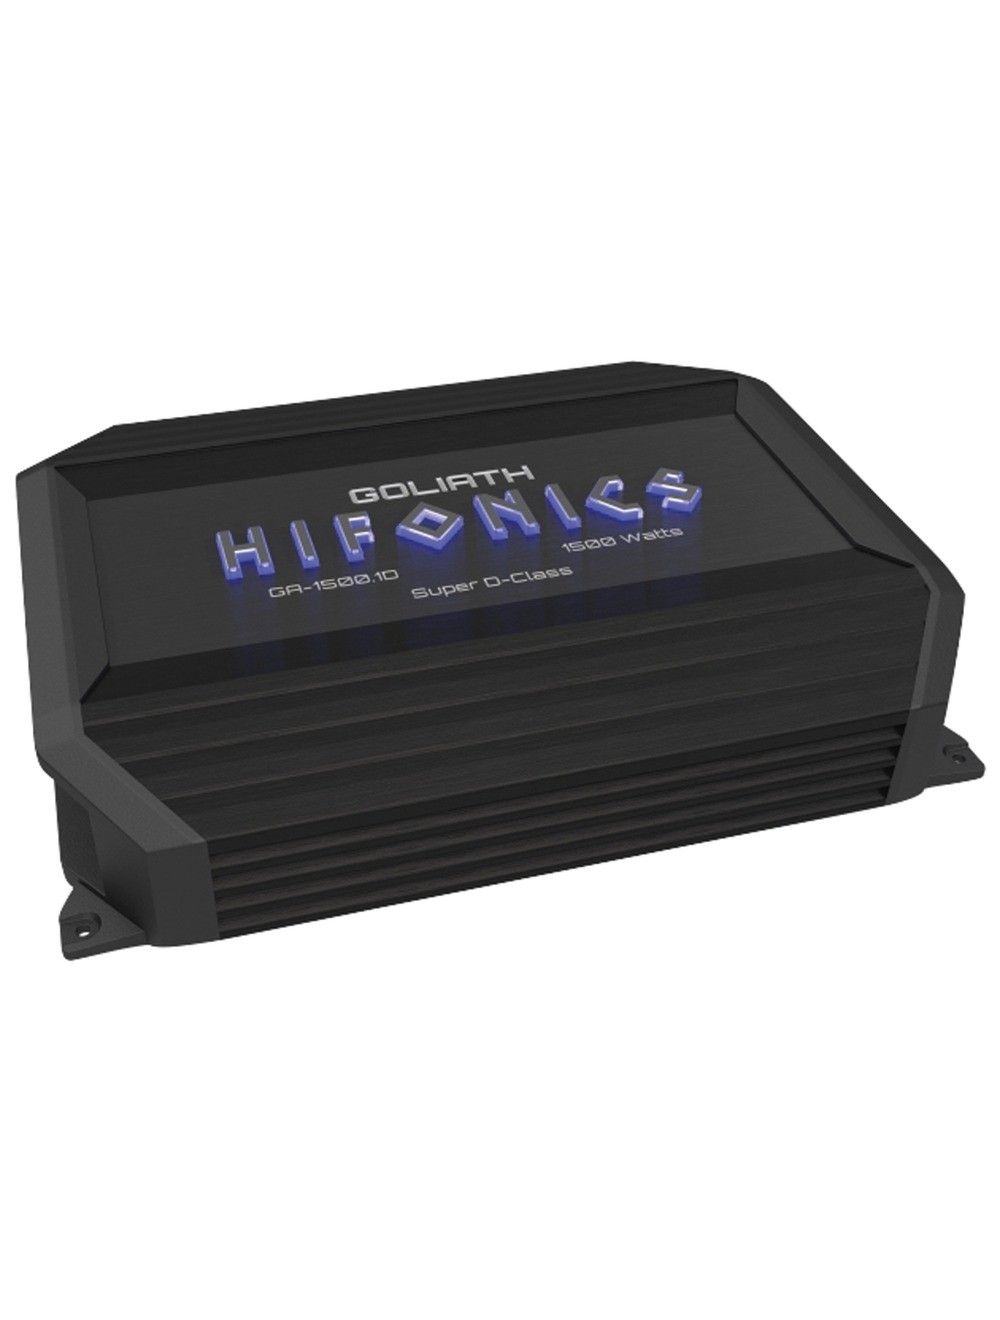 Hifonics GA-1500.1D GOLIATH Series Monoblock Super D-Class(TM) Amp (1,500 Watts)